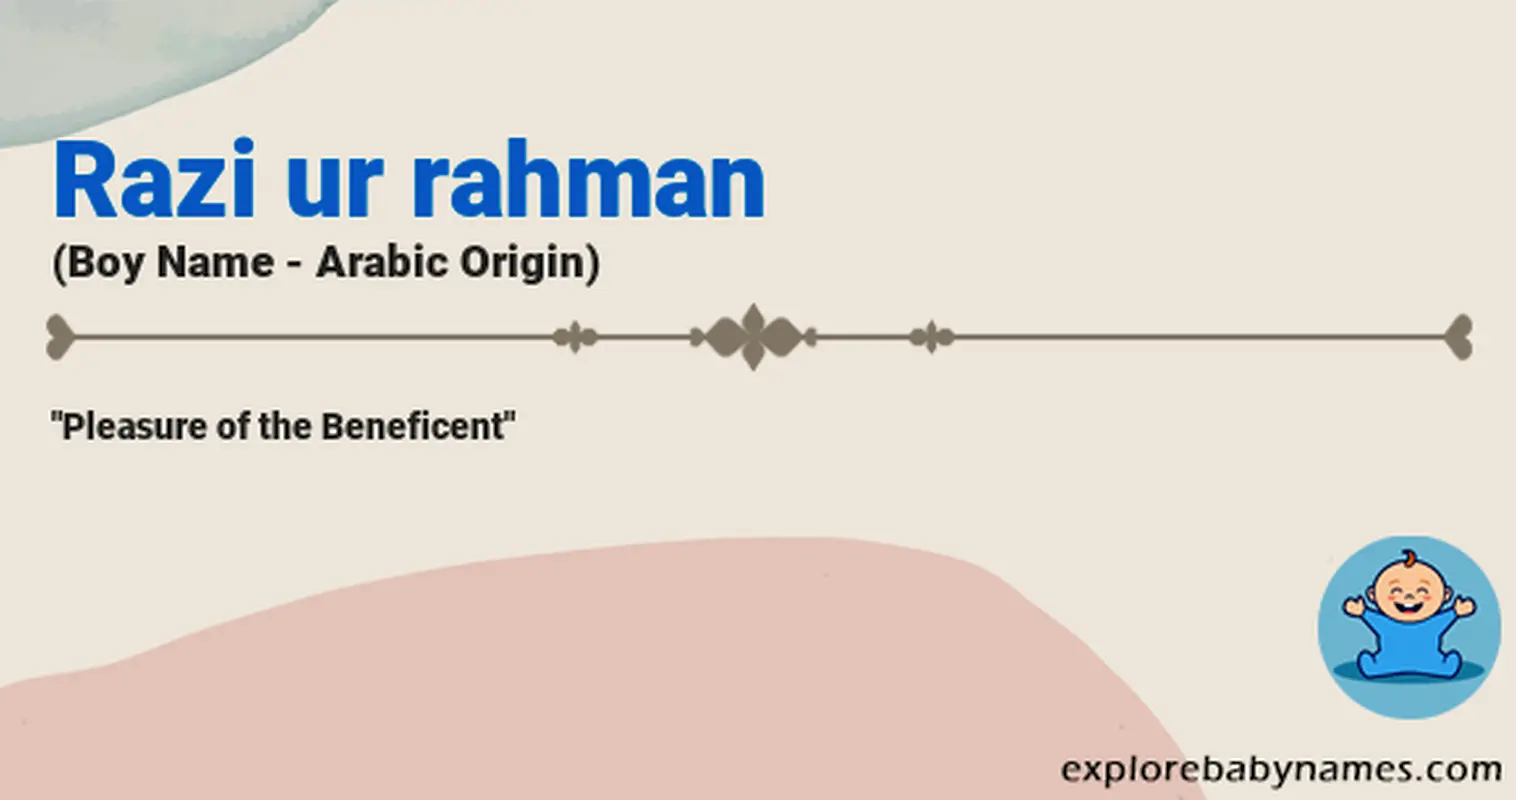 Meaning of Razi ur rahman